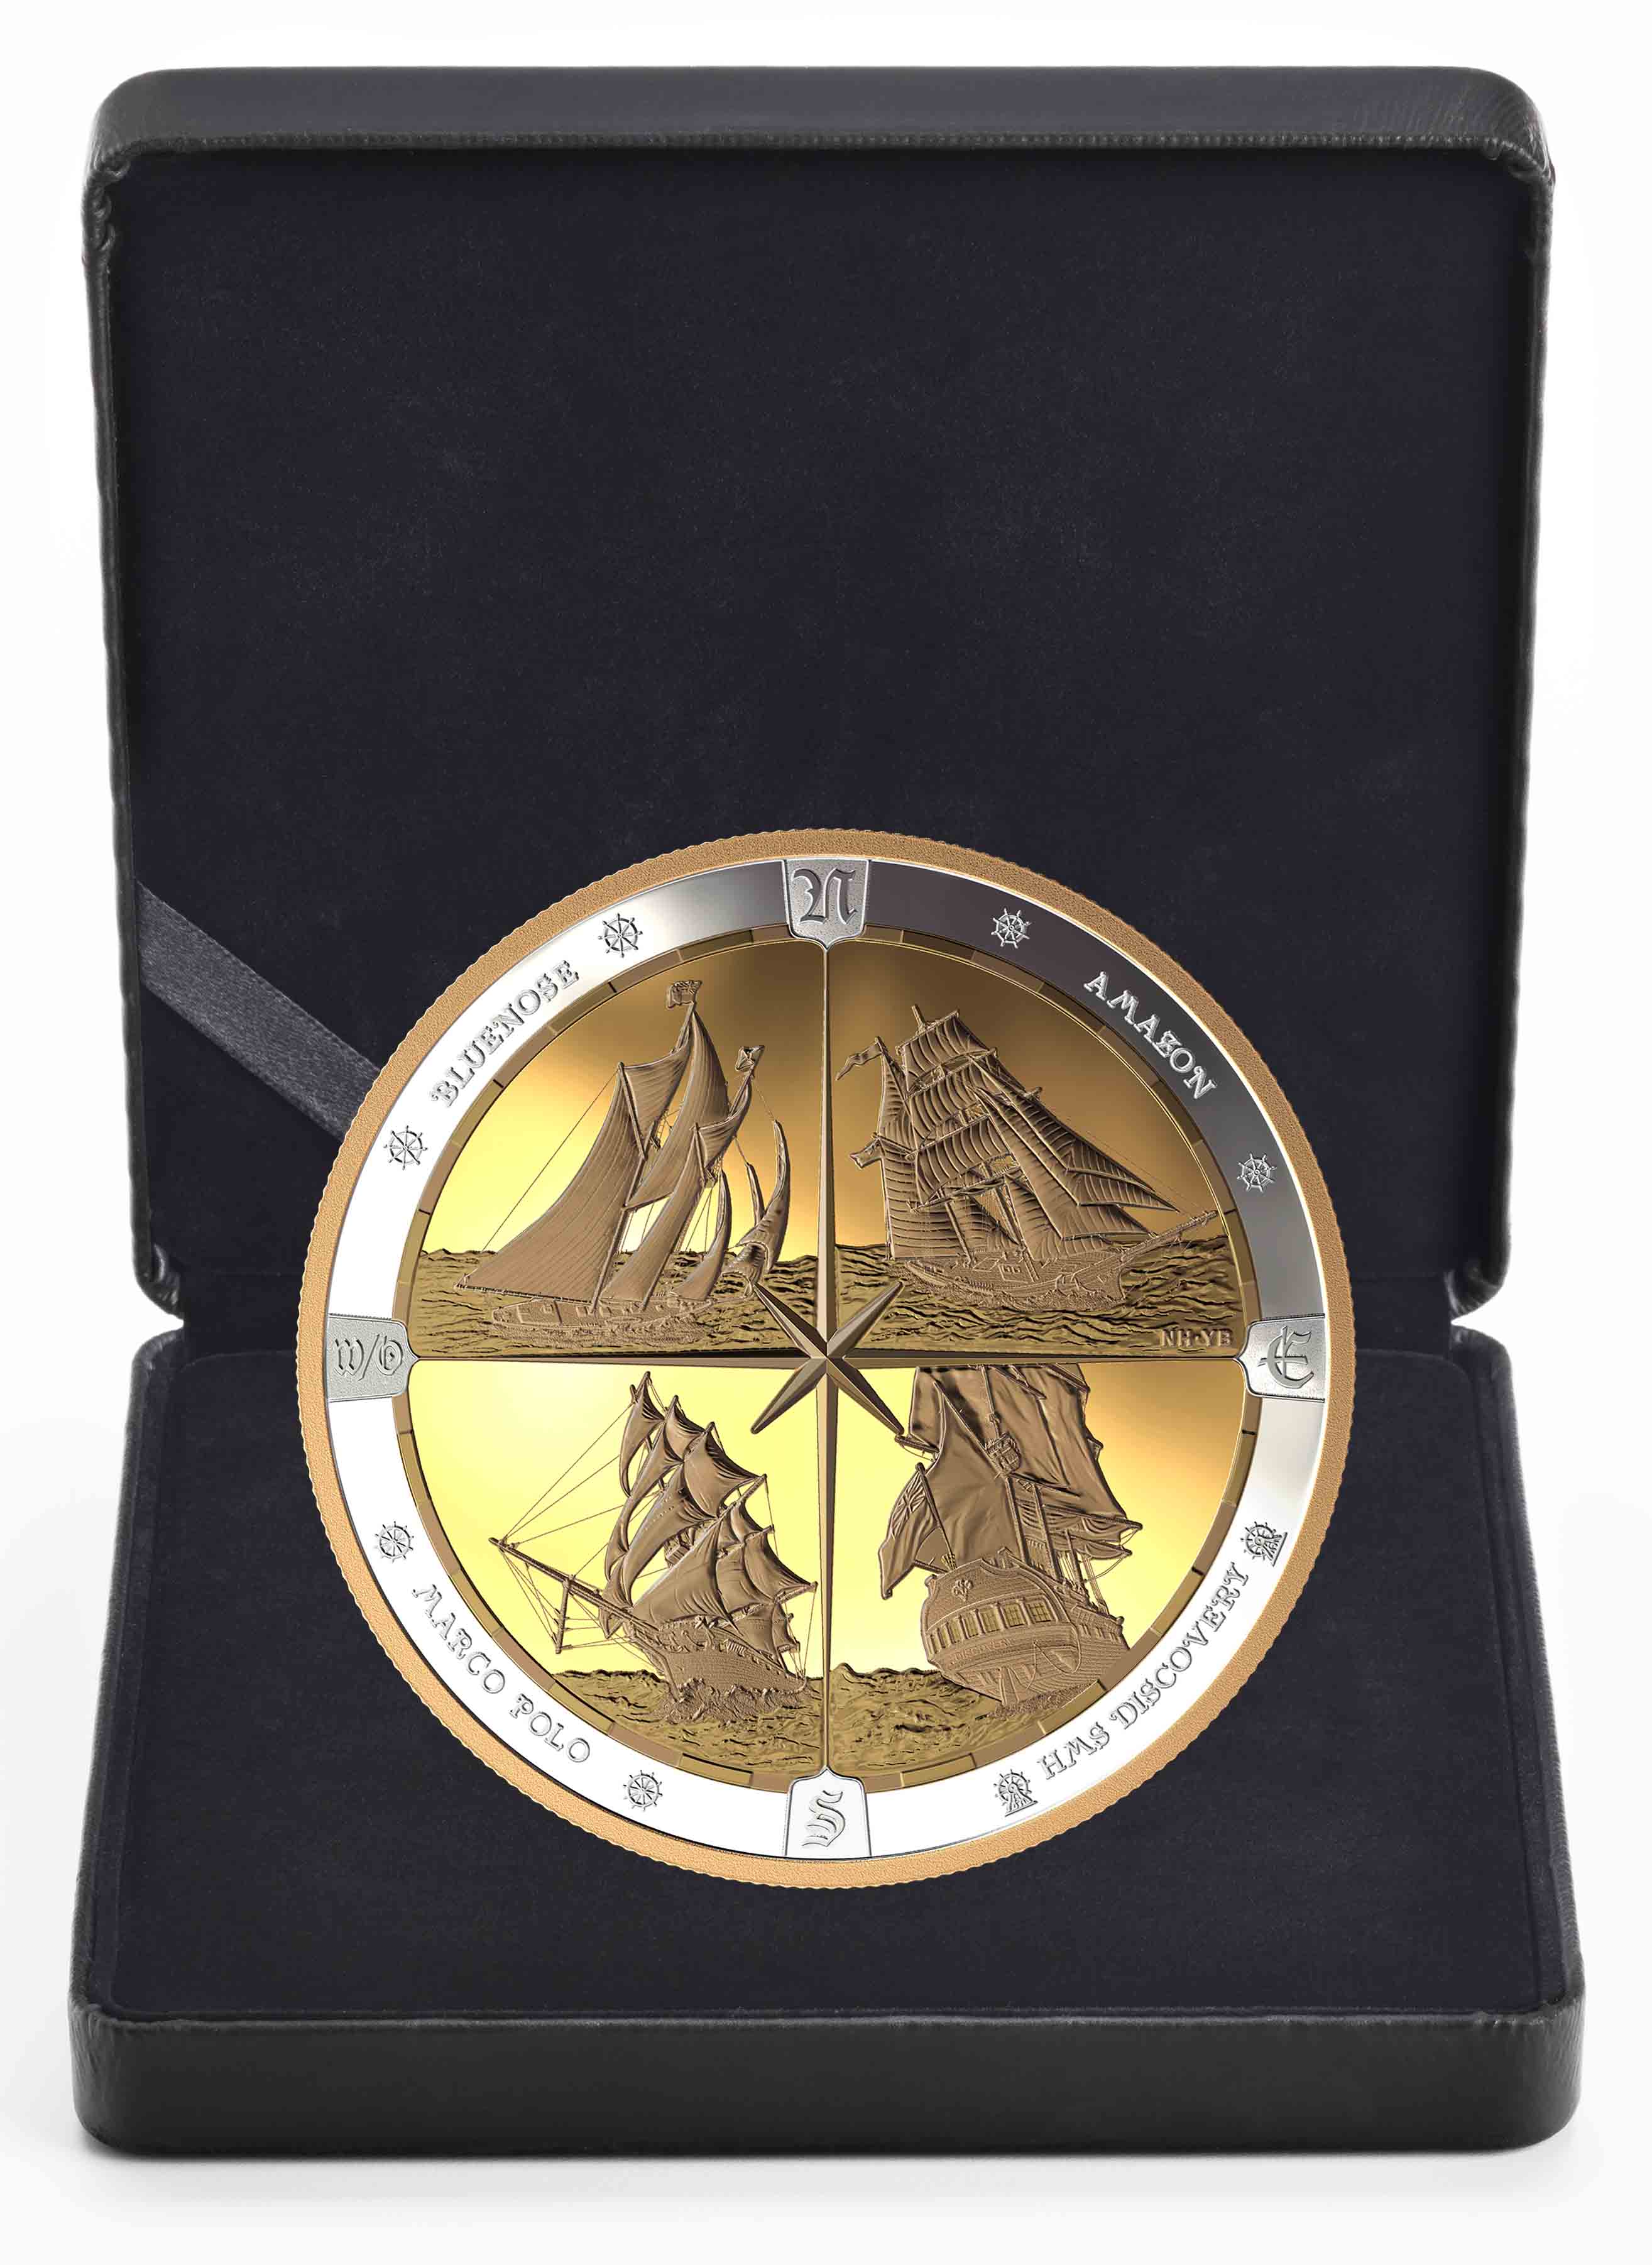 TALL SHIPS Compass Gold Plating 1/2 Kilo Silver Coin $125 Canada 2019